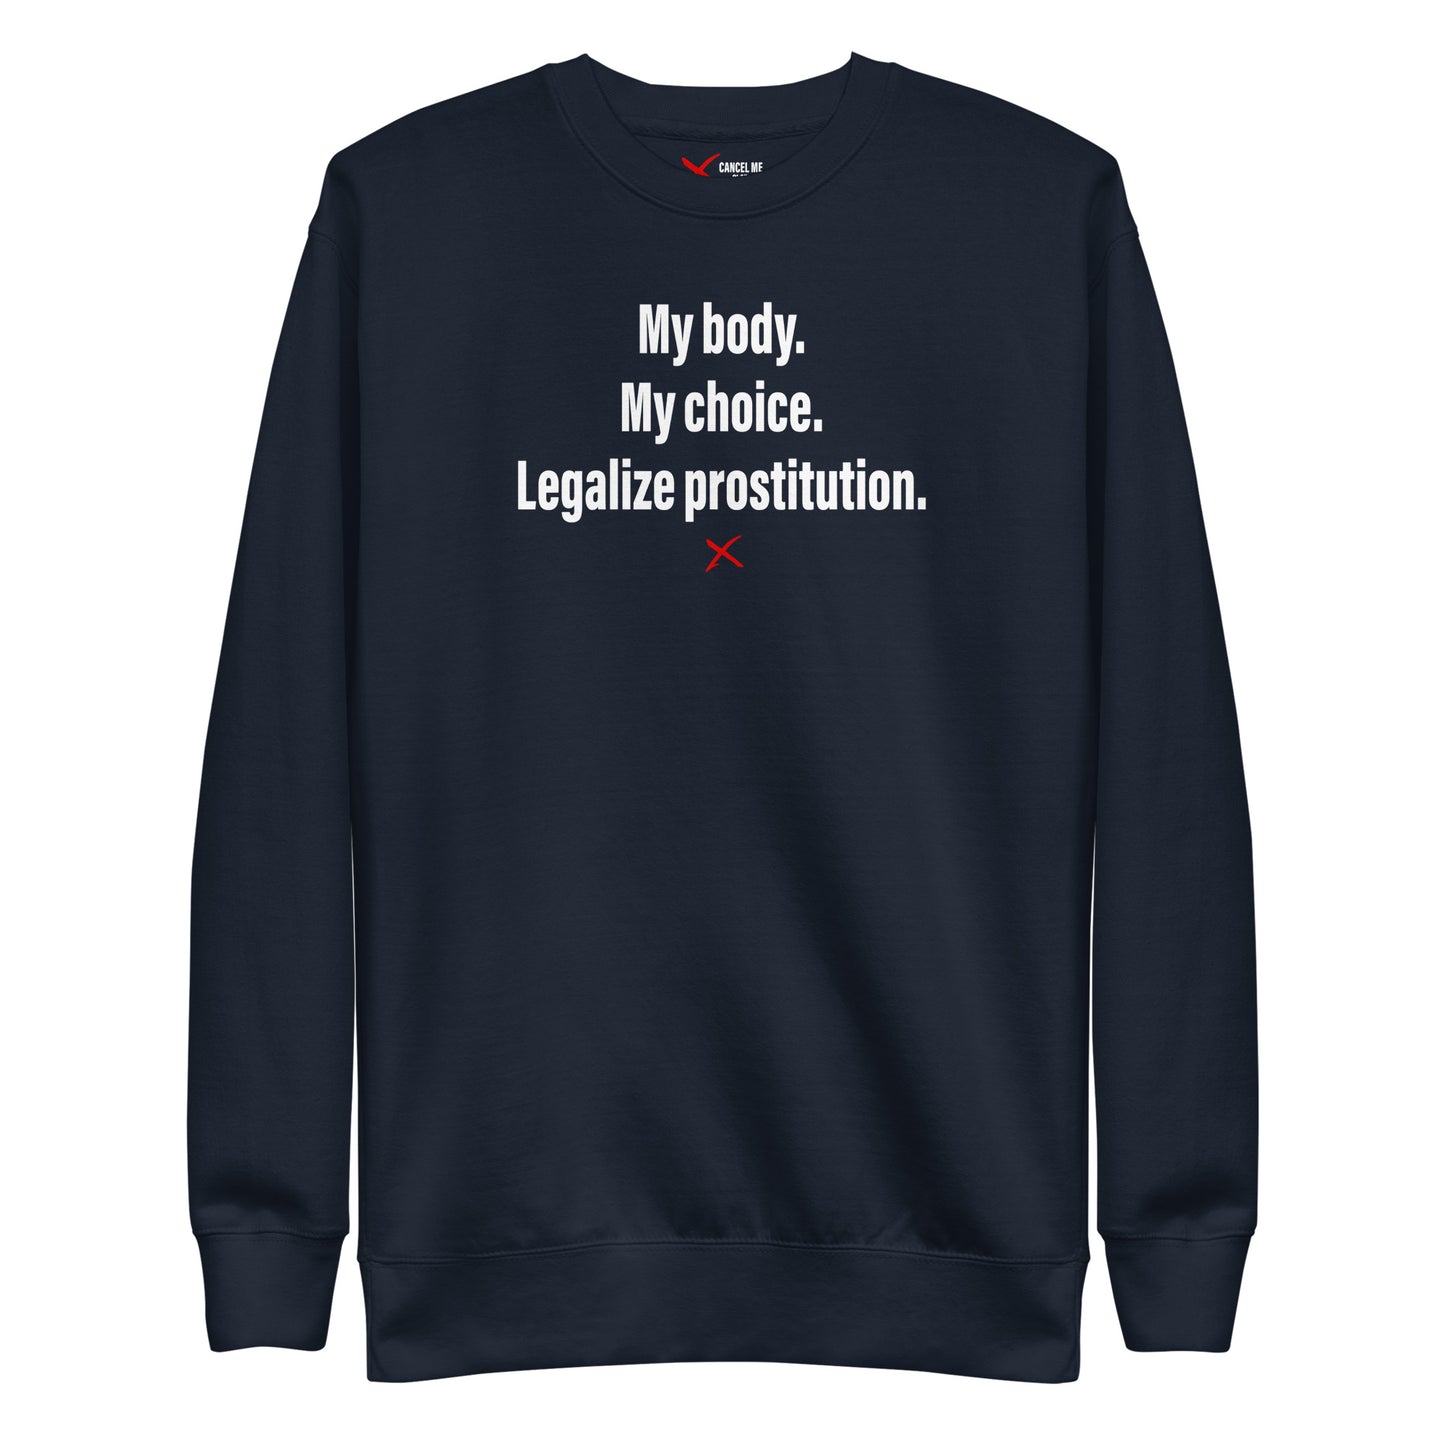 My body. My choice. Legalize prostitution. - Sweatshirt